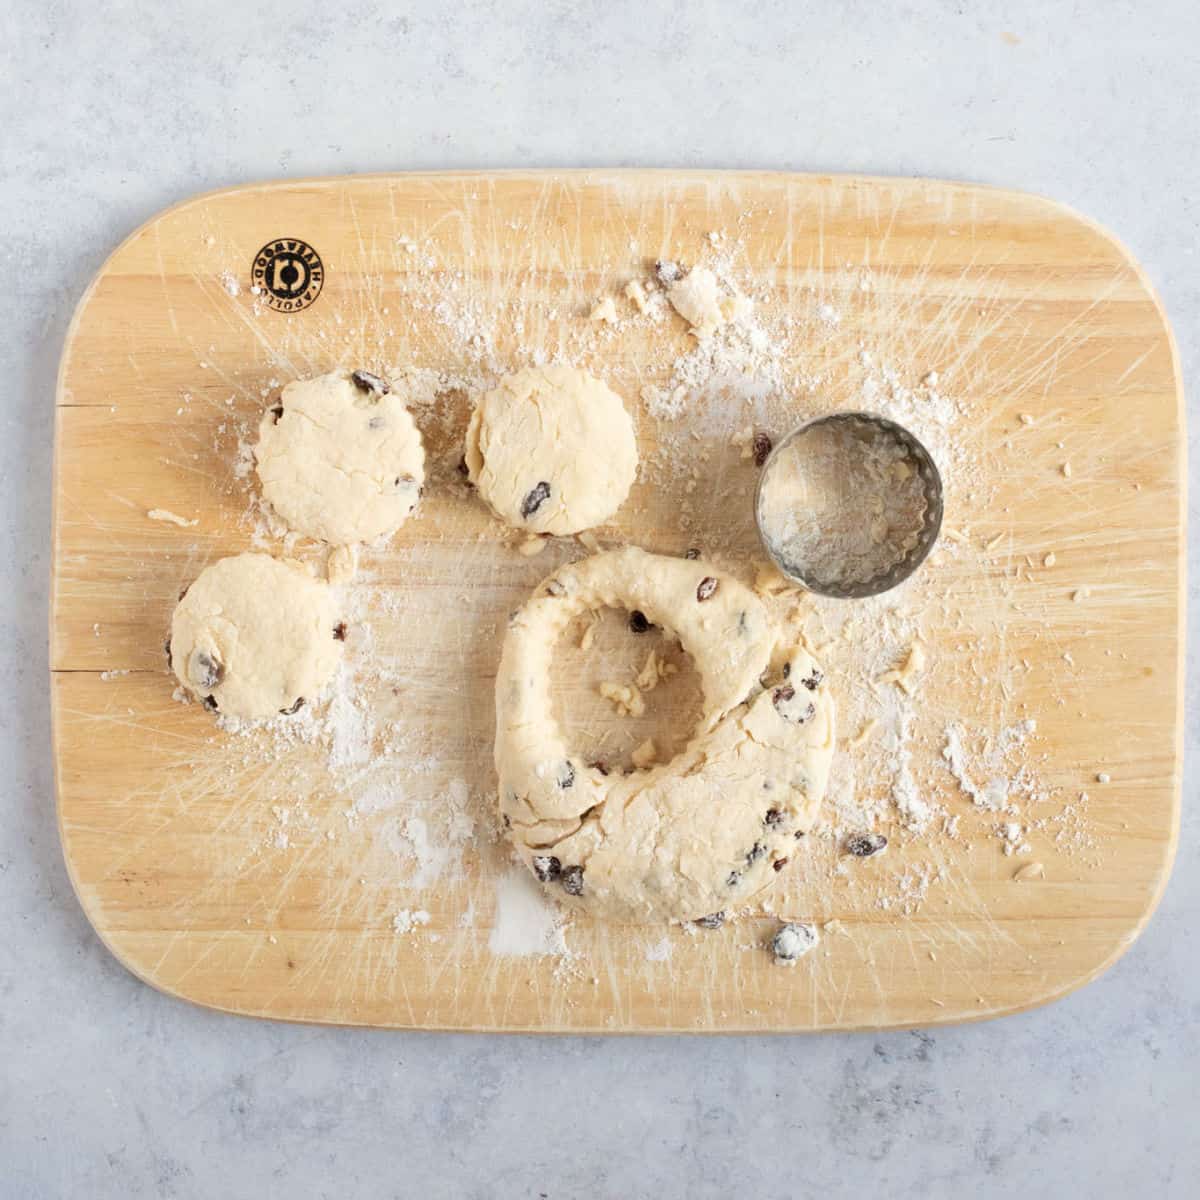 Scone dough on a wooden board.